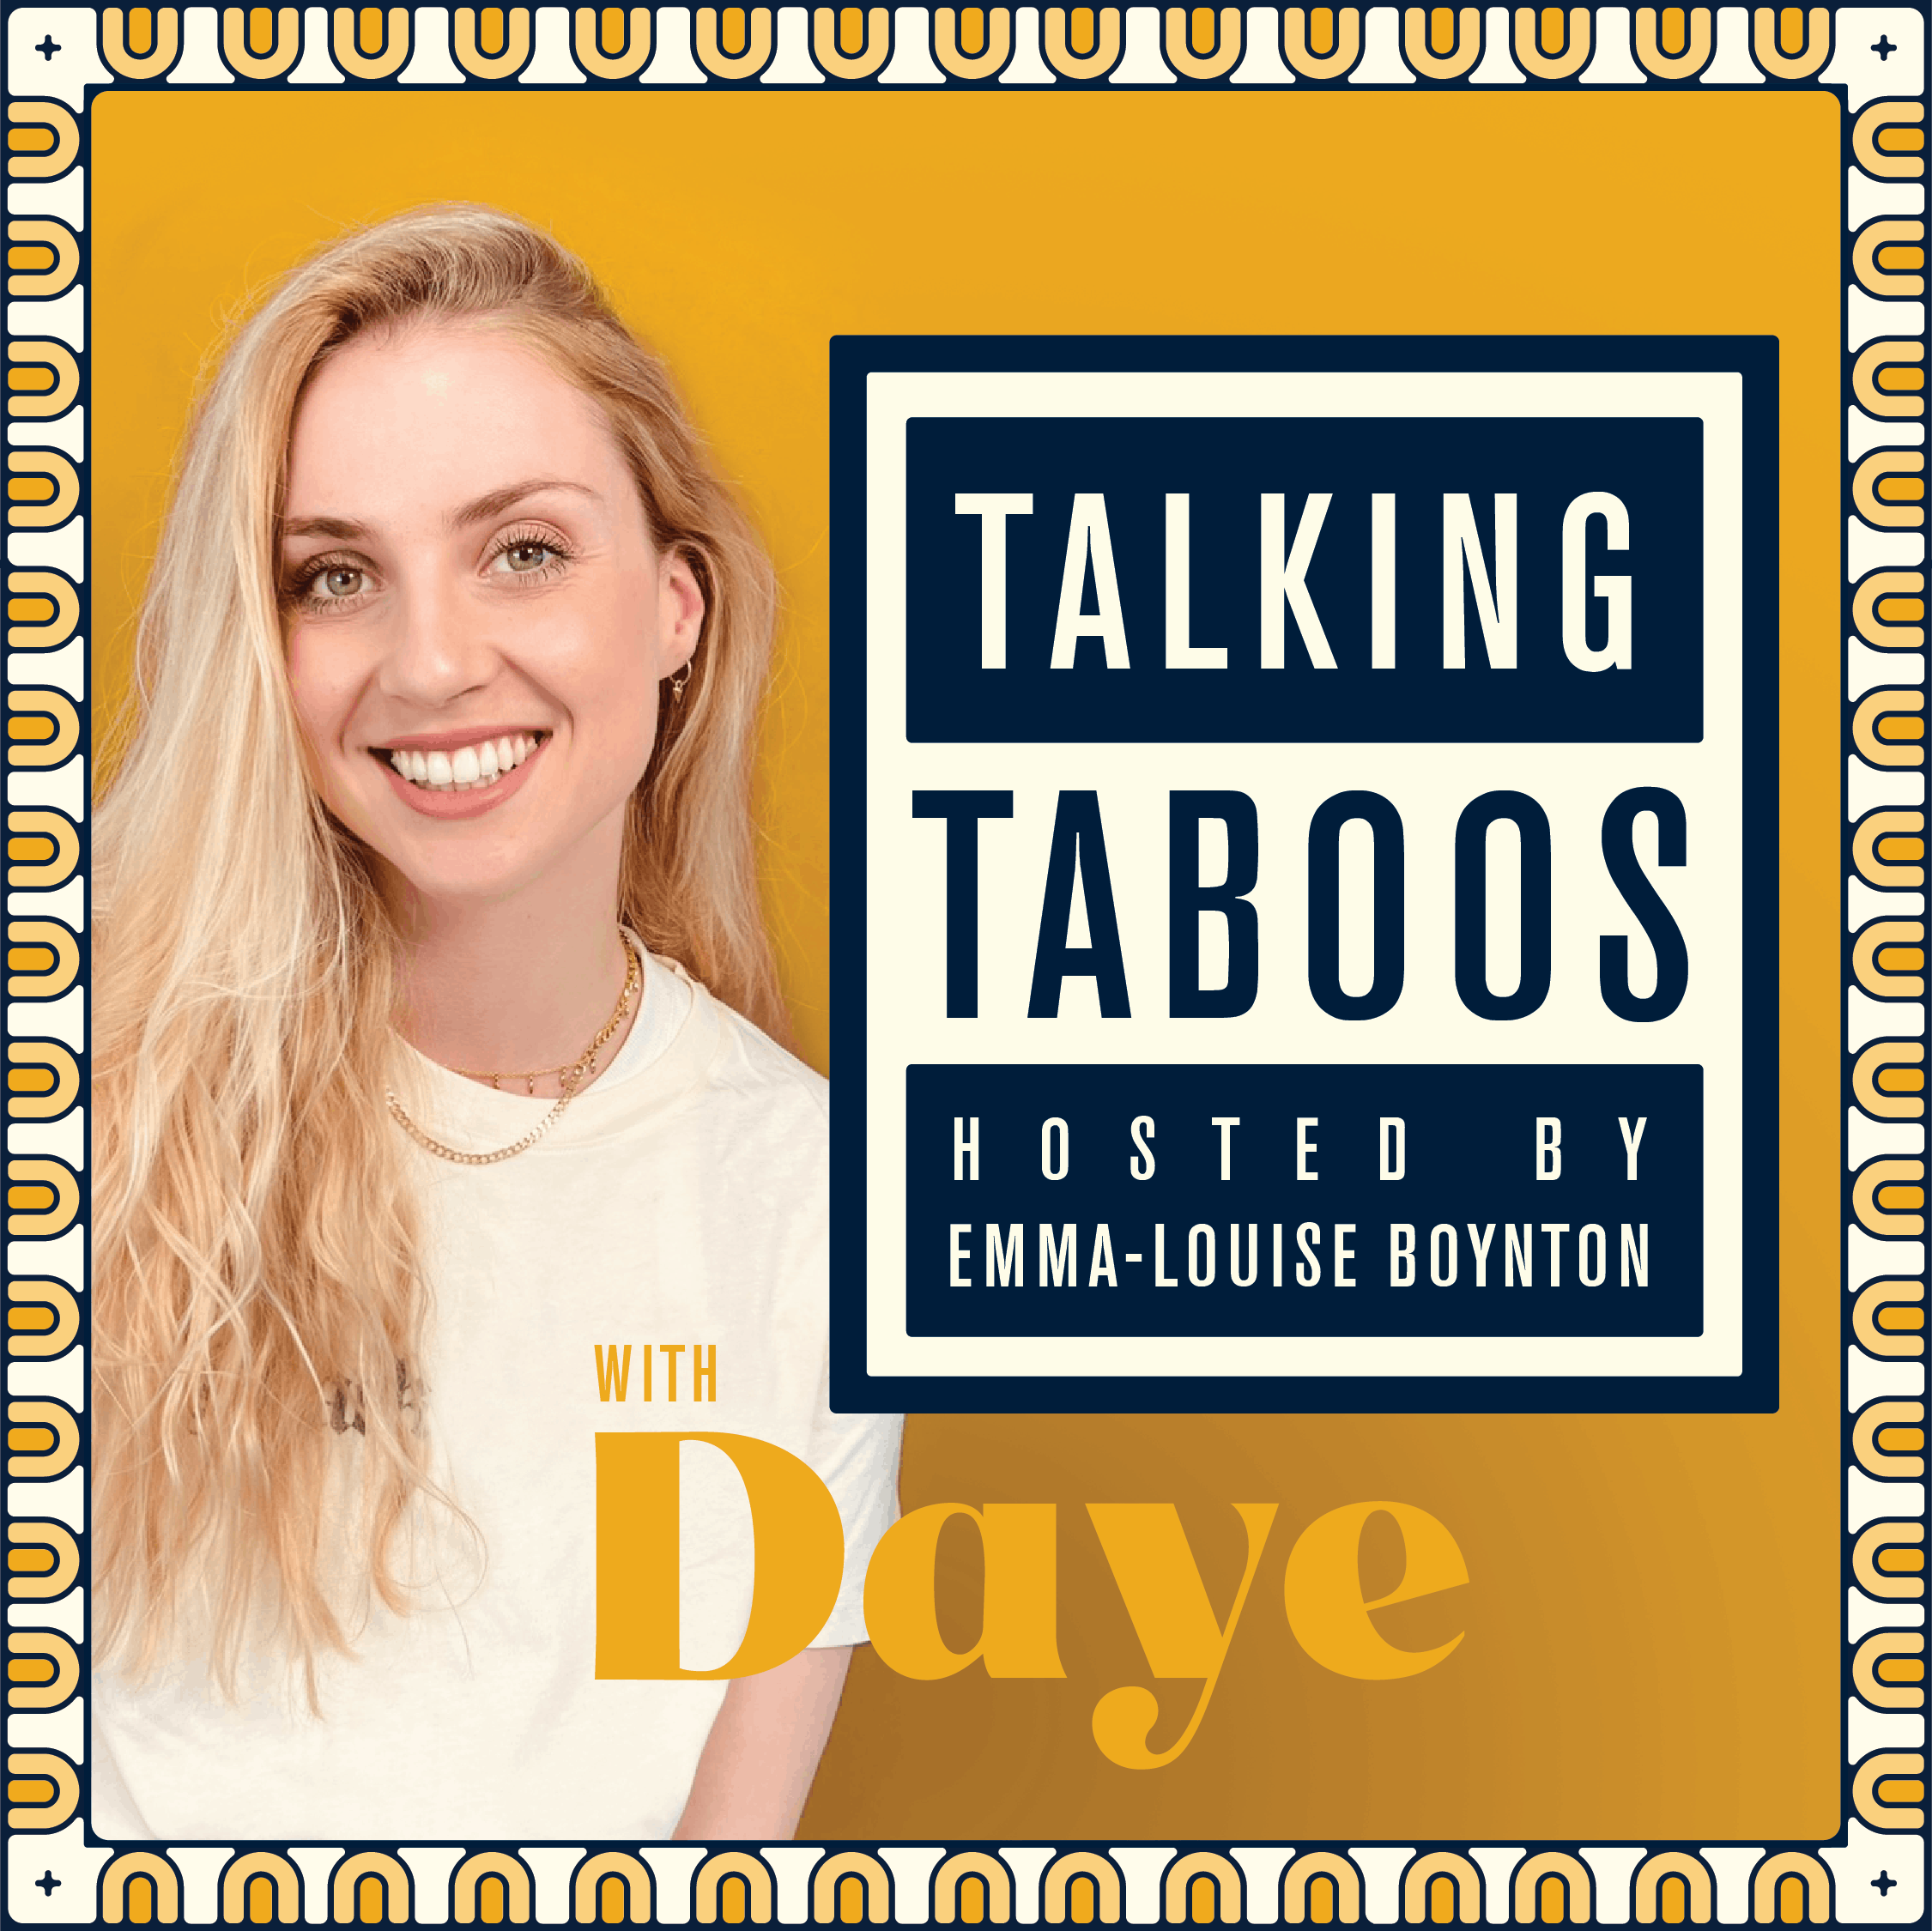 Talking Taboos with Daye